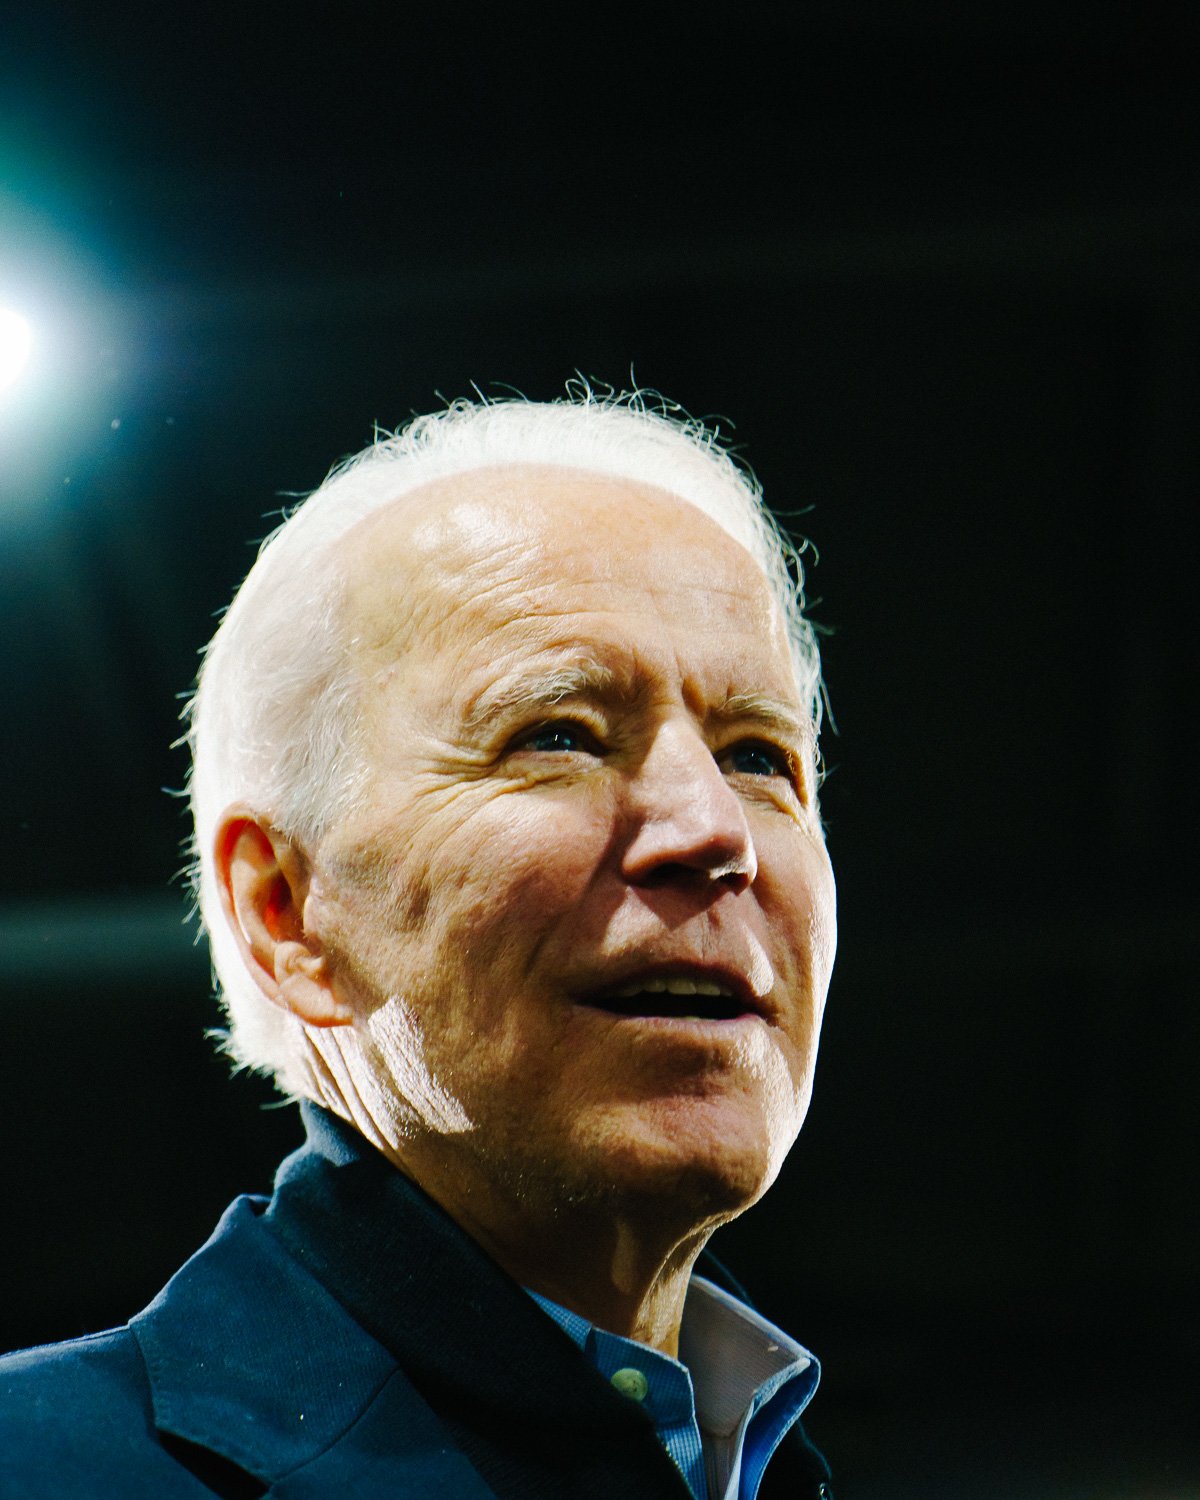  Joe Biden on the 2020 Presidential Campaign trail, Council Bluffs, IA, 2020 